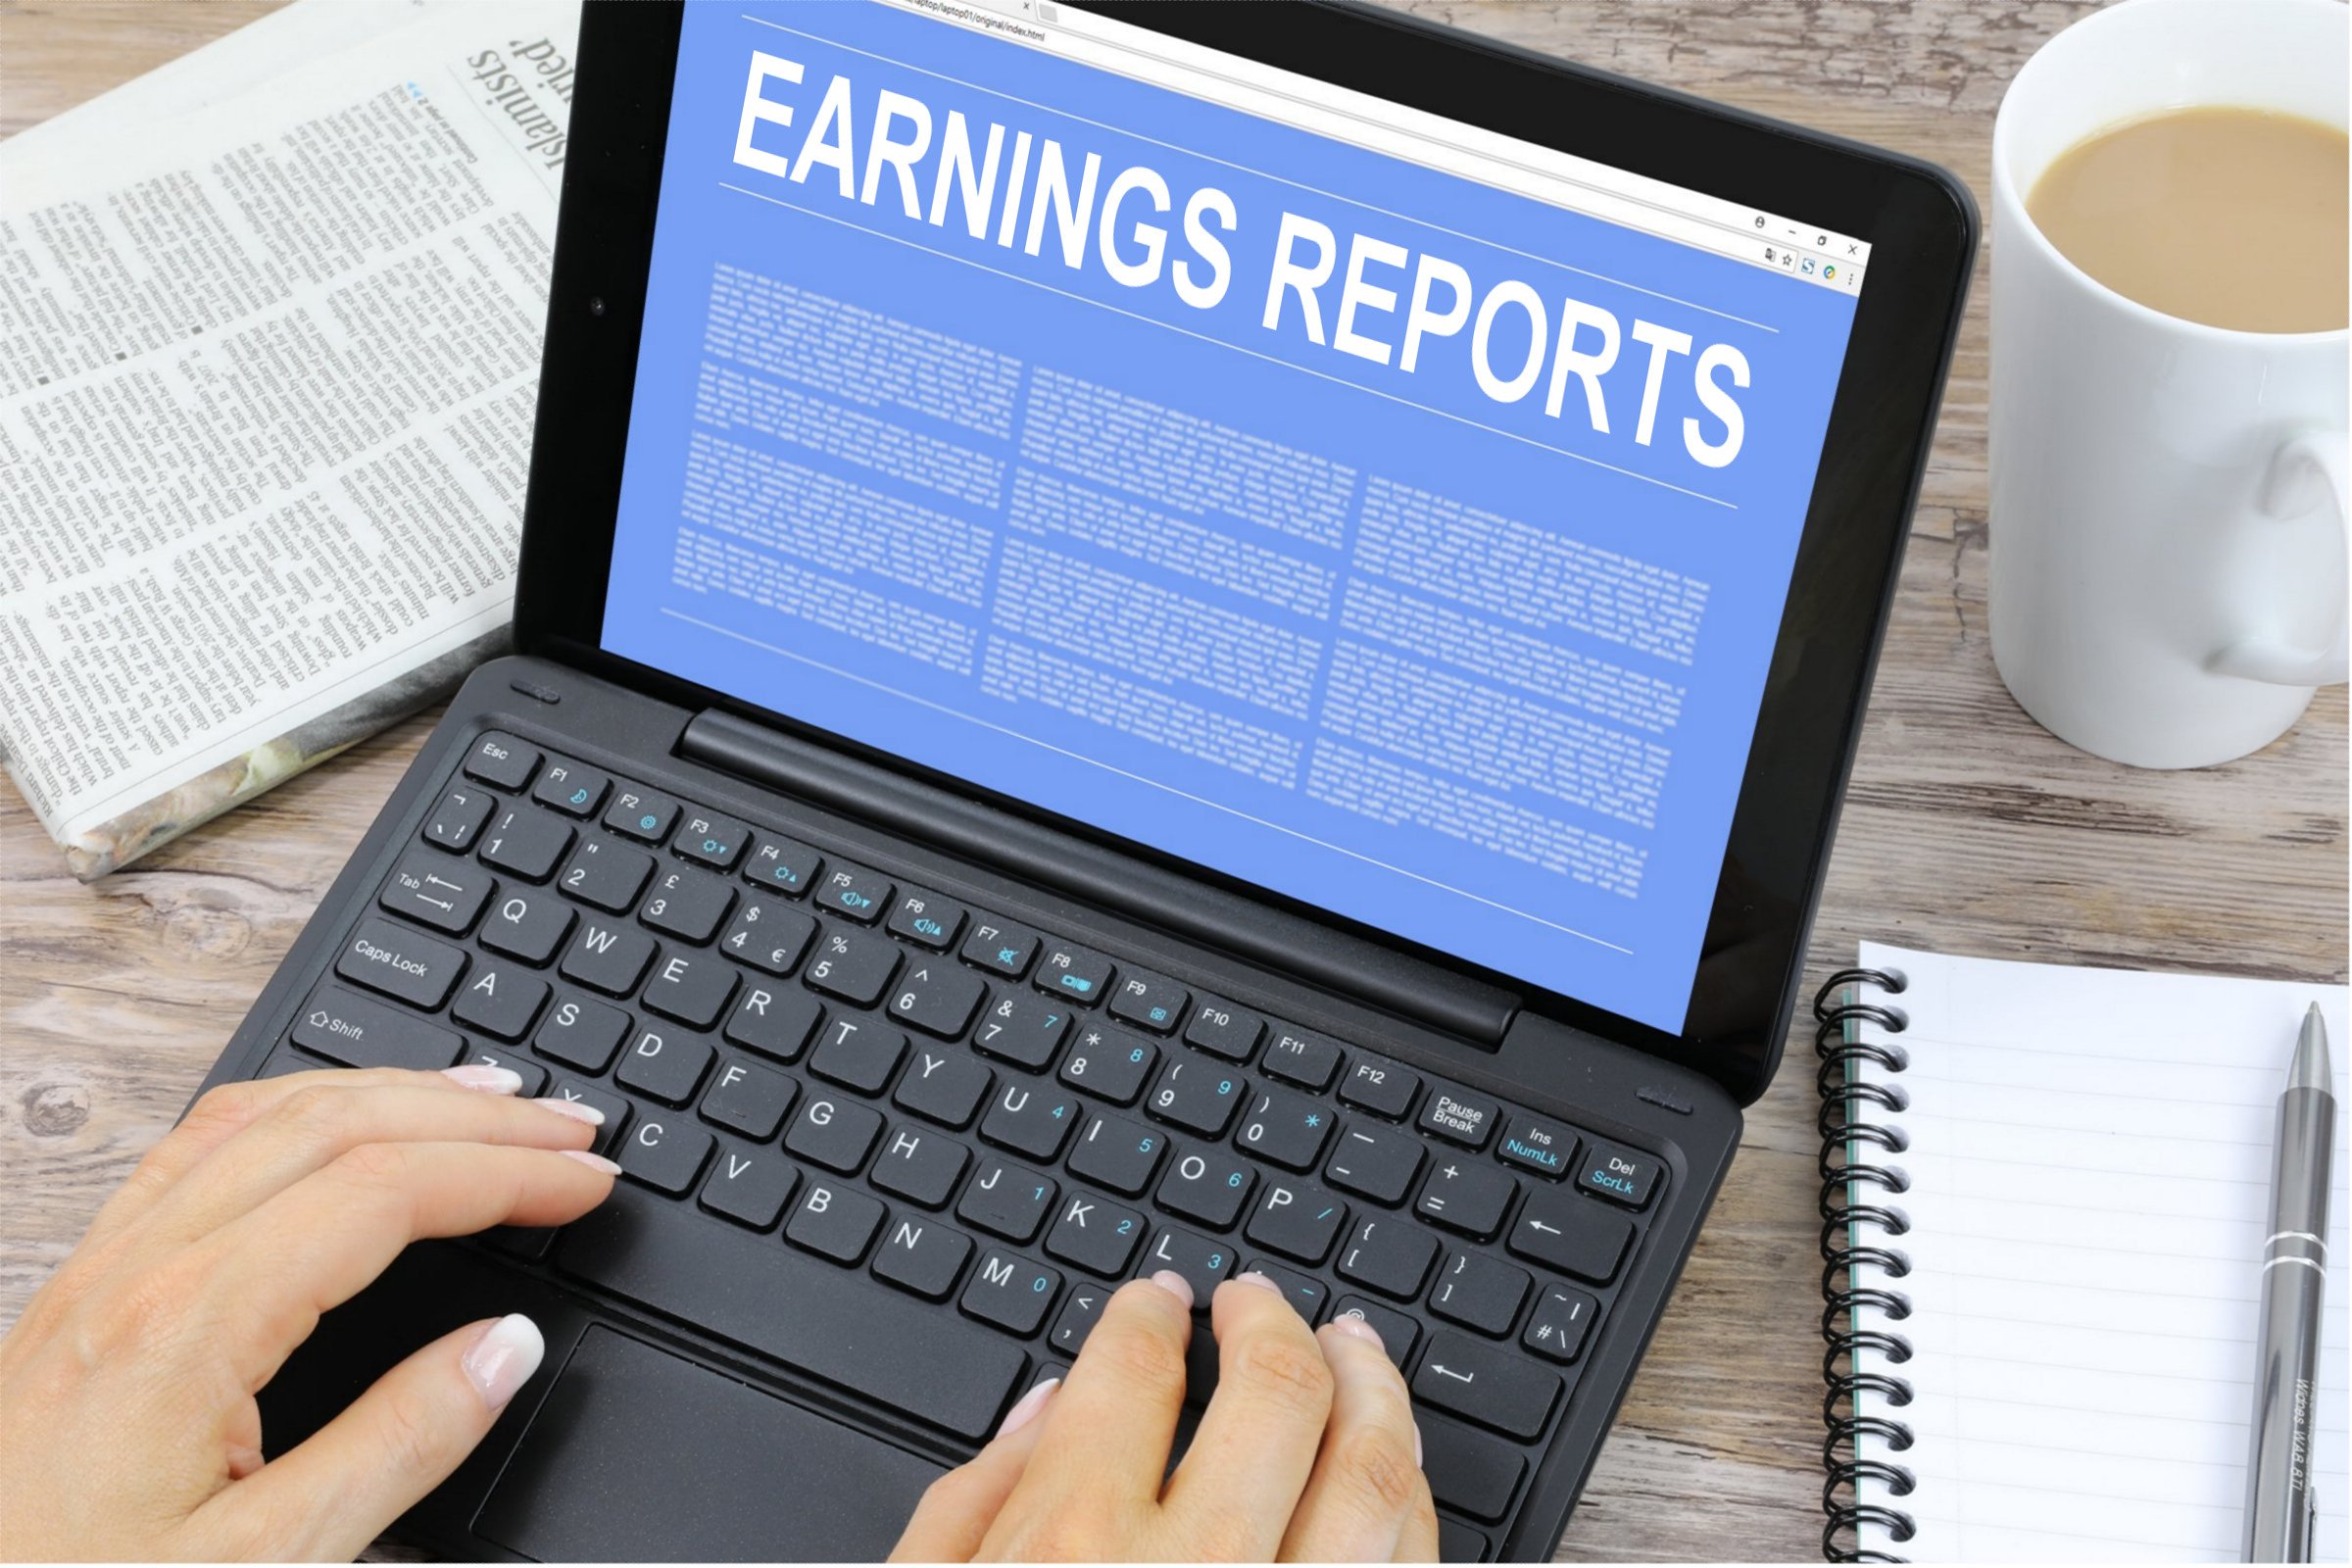 Earnings Reports